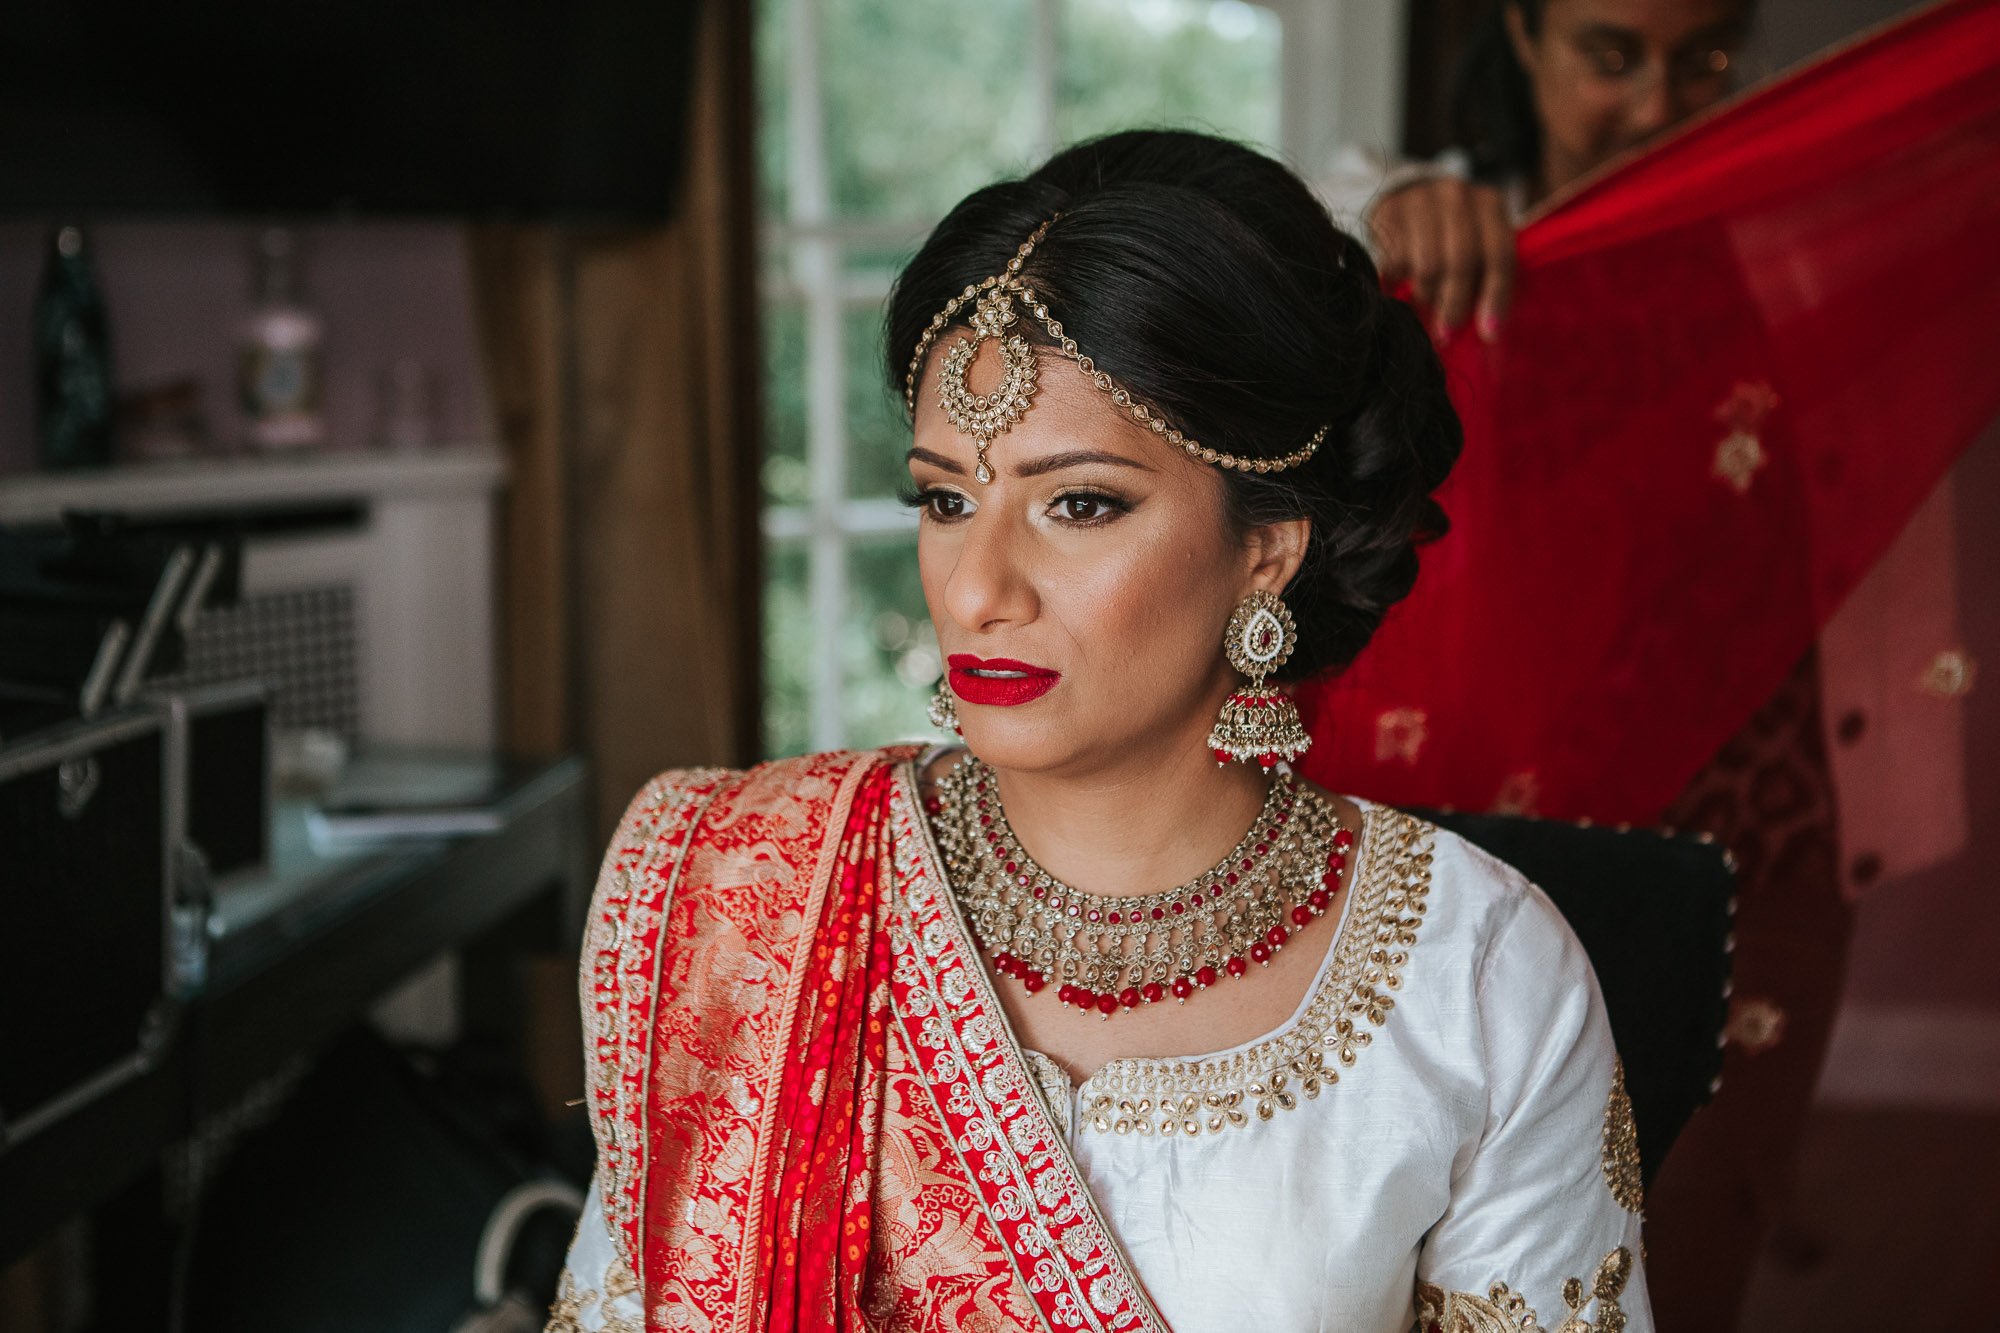 Hindu Bride dressed in traditional red sari.